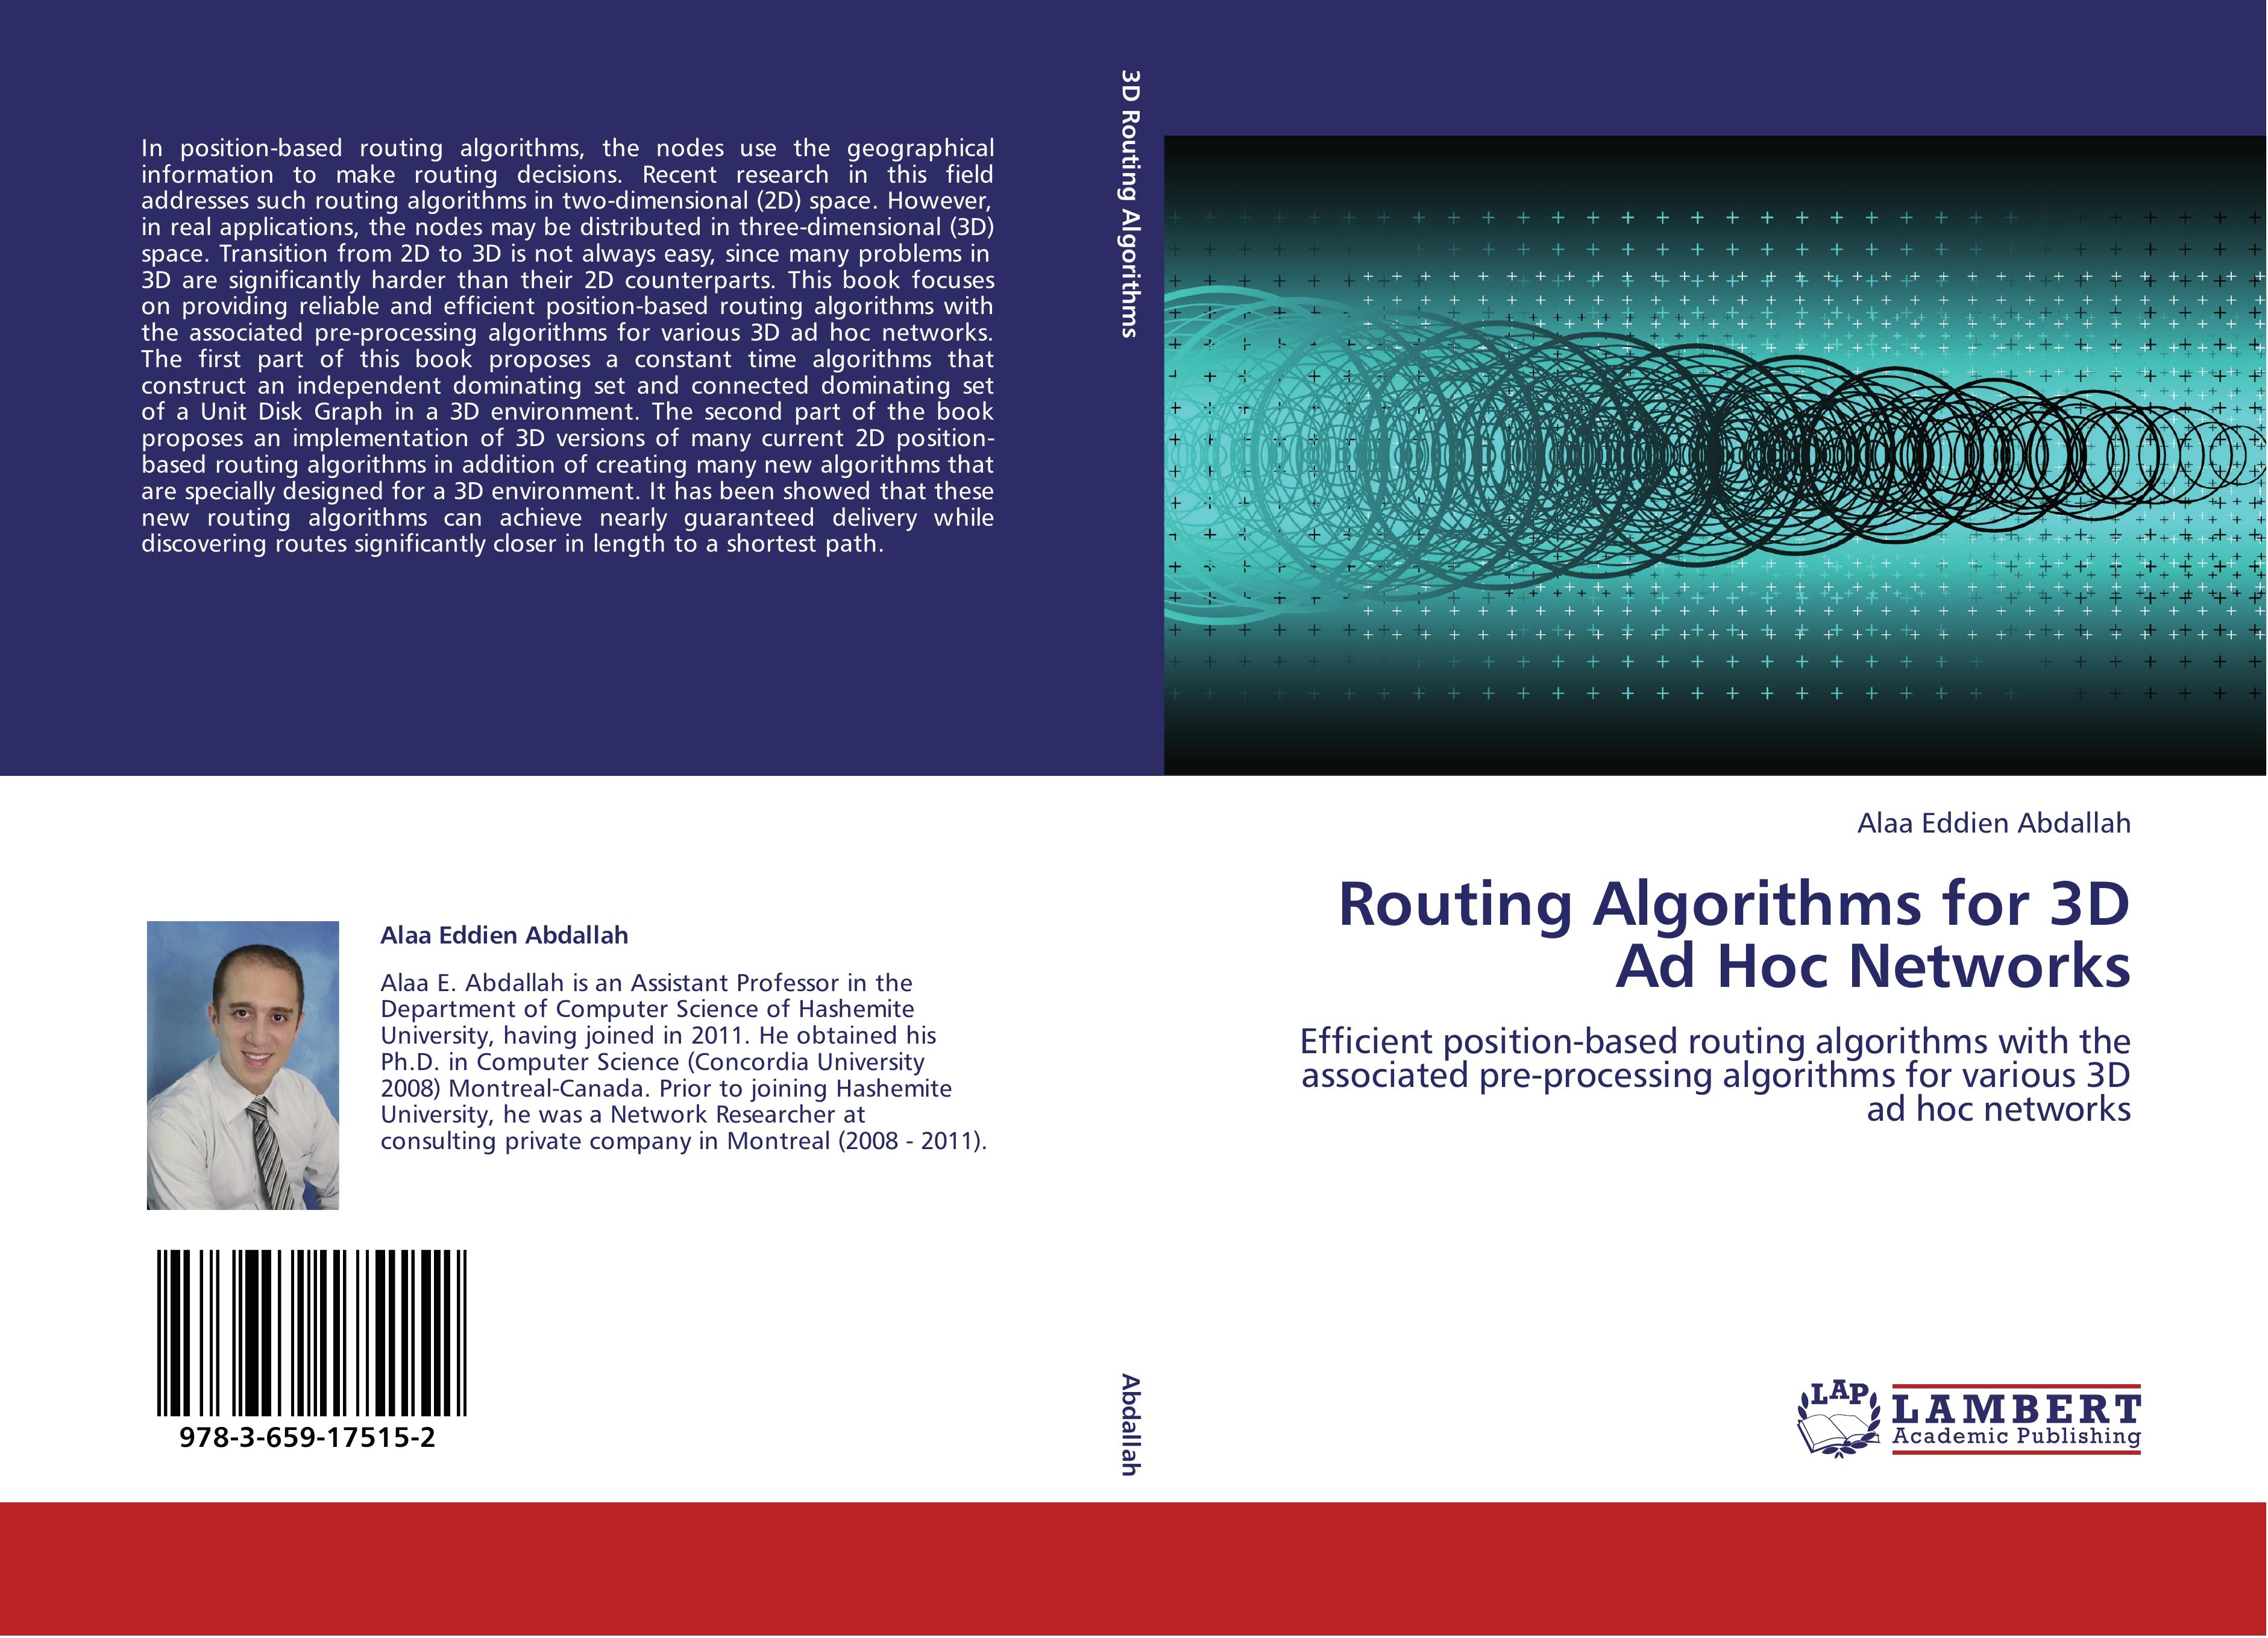 Routing Algorithms for 3D Ad Hoc Networks - Alaa Eddien Abdallah